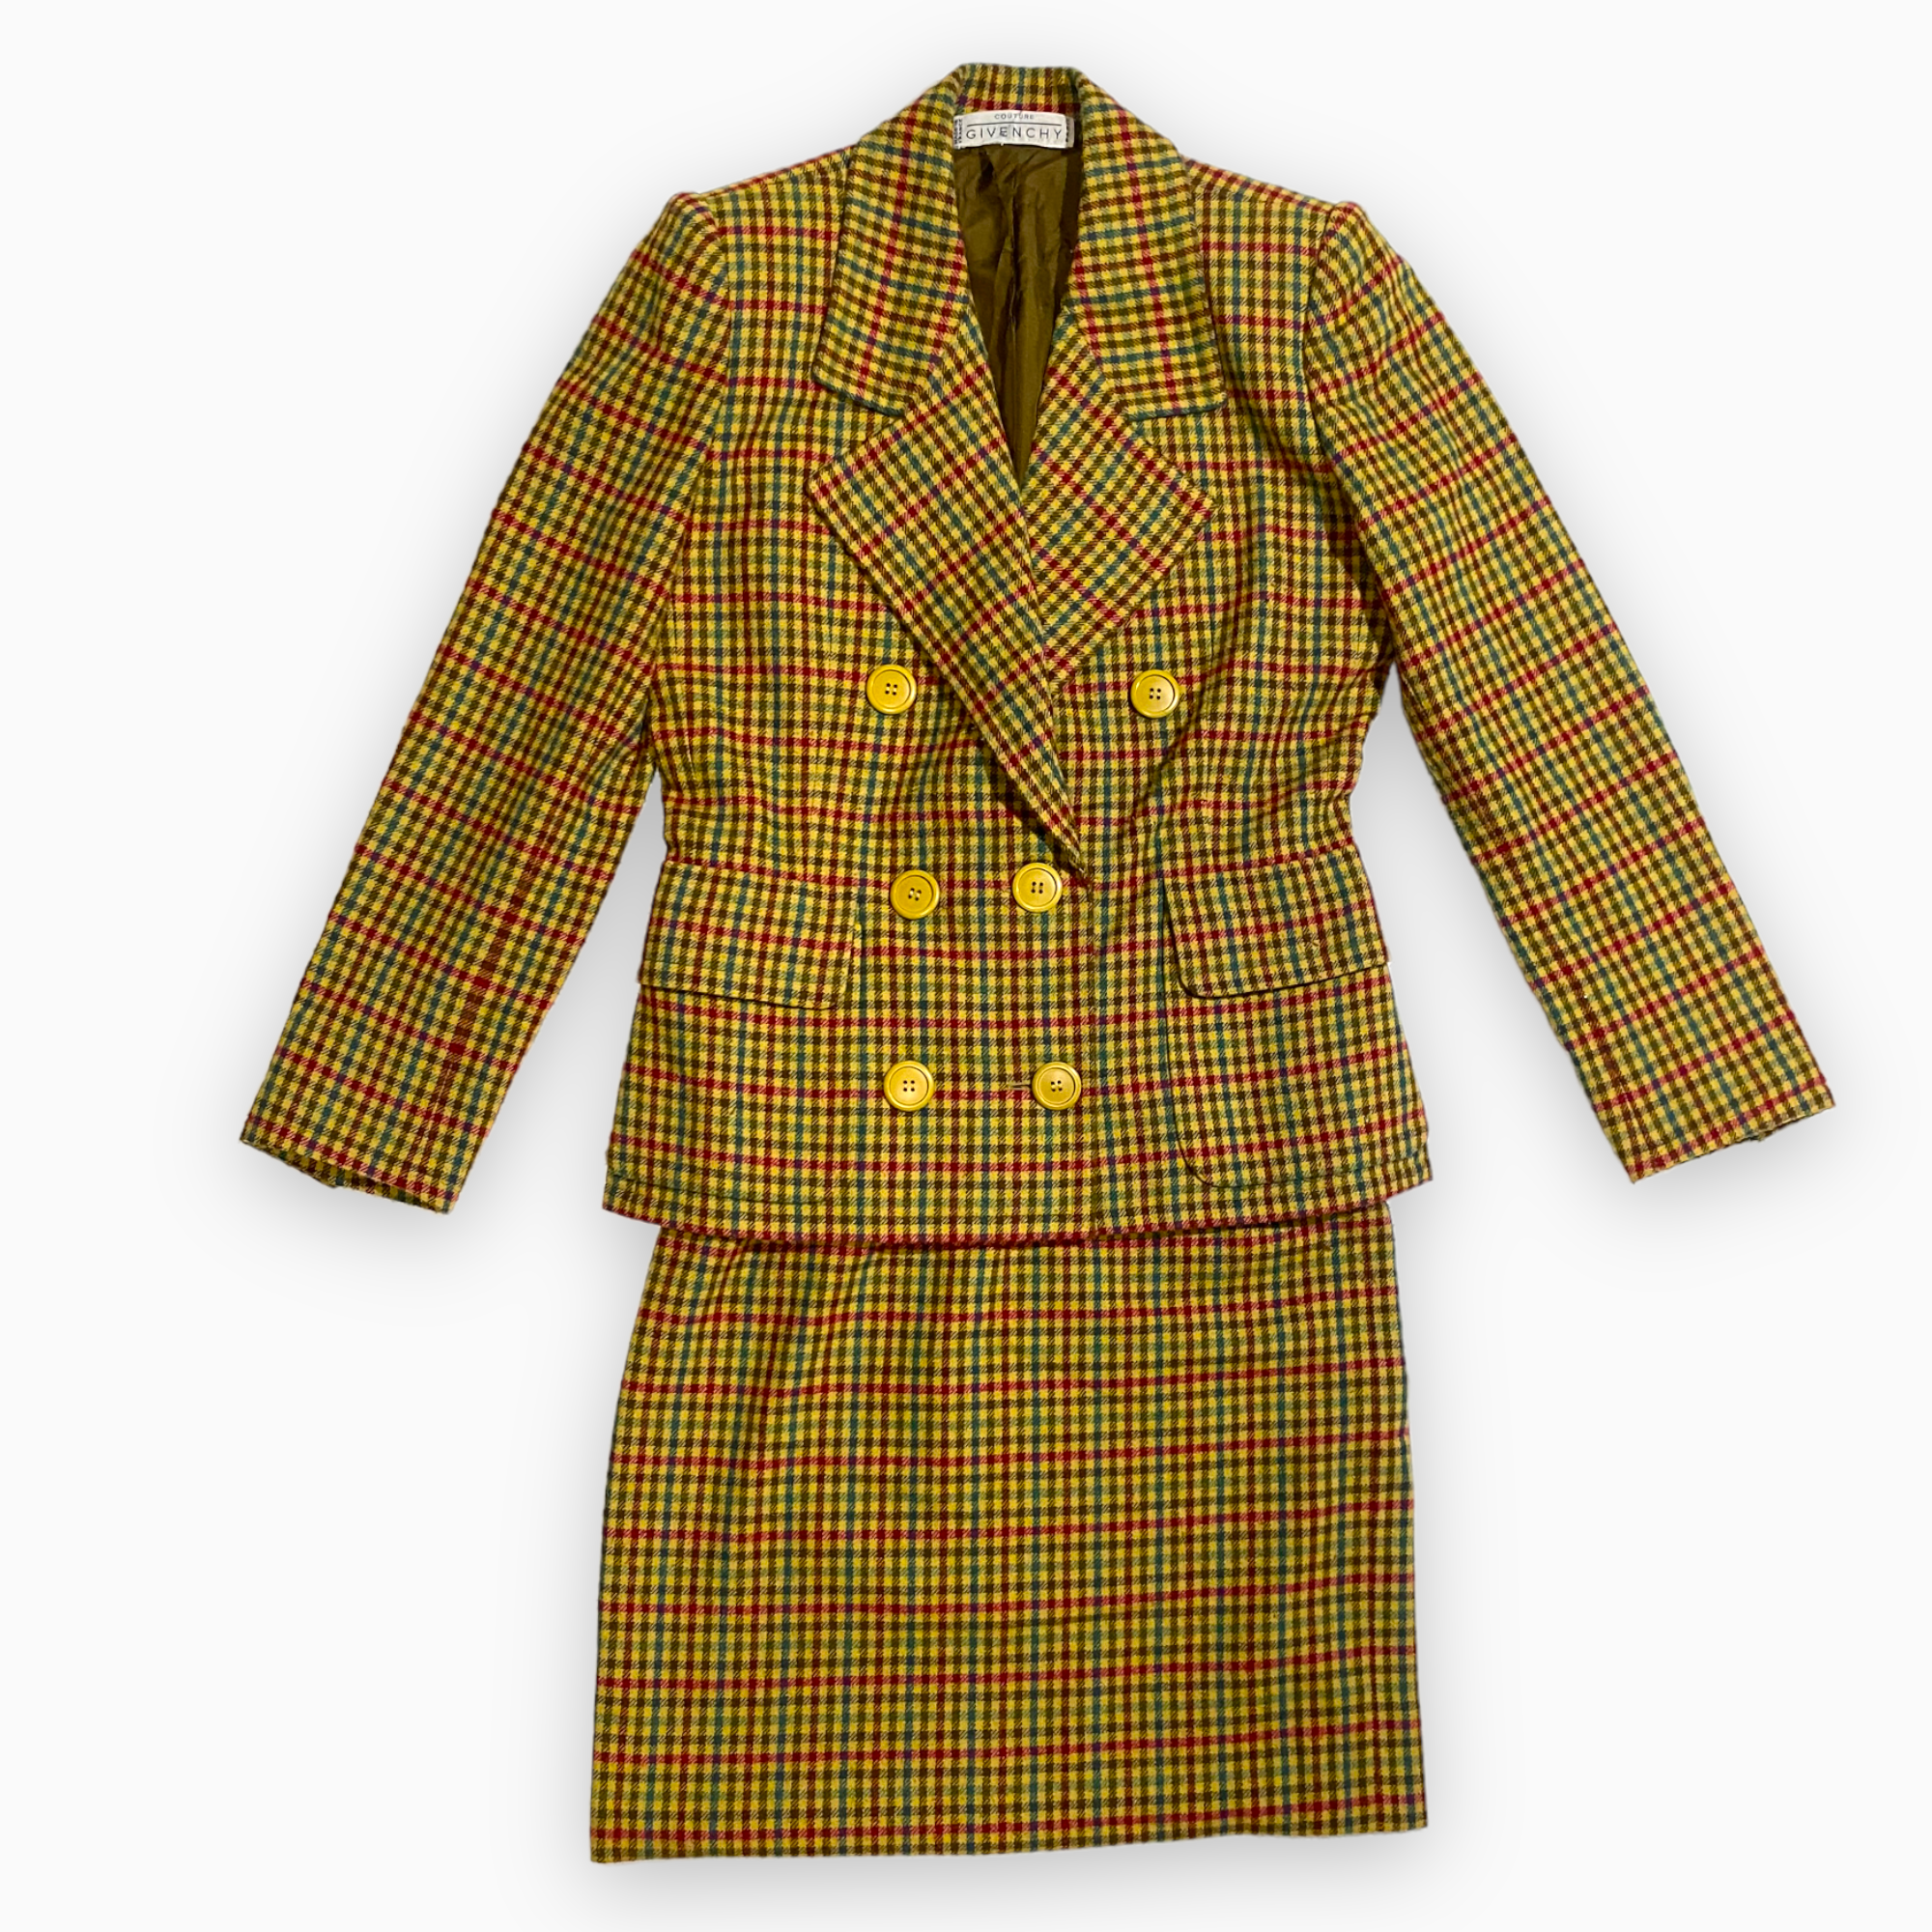 WOMEN'S CLUELESS CHER Costume 90s Fancy Dress Yellow Check Skirt Suit  £44.99 - PicClick UK